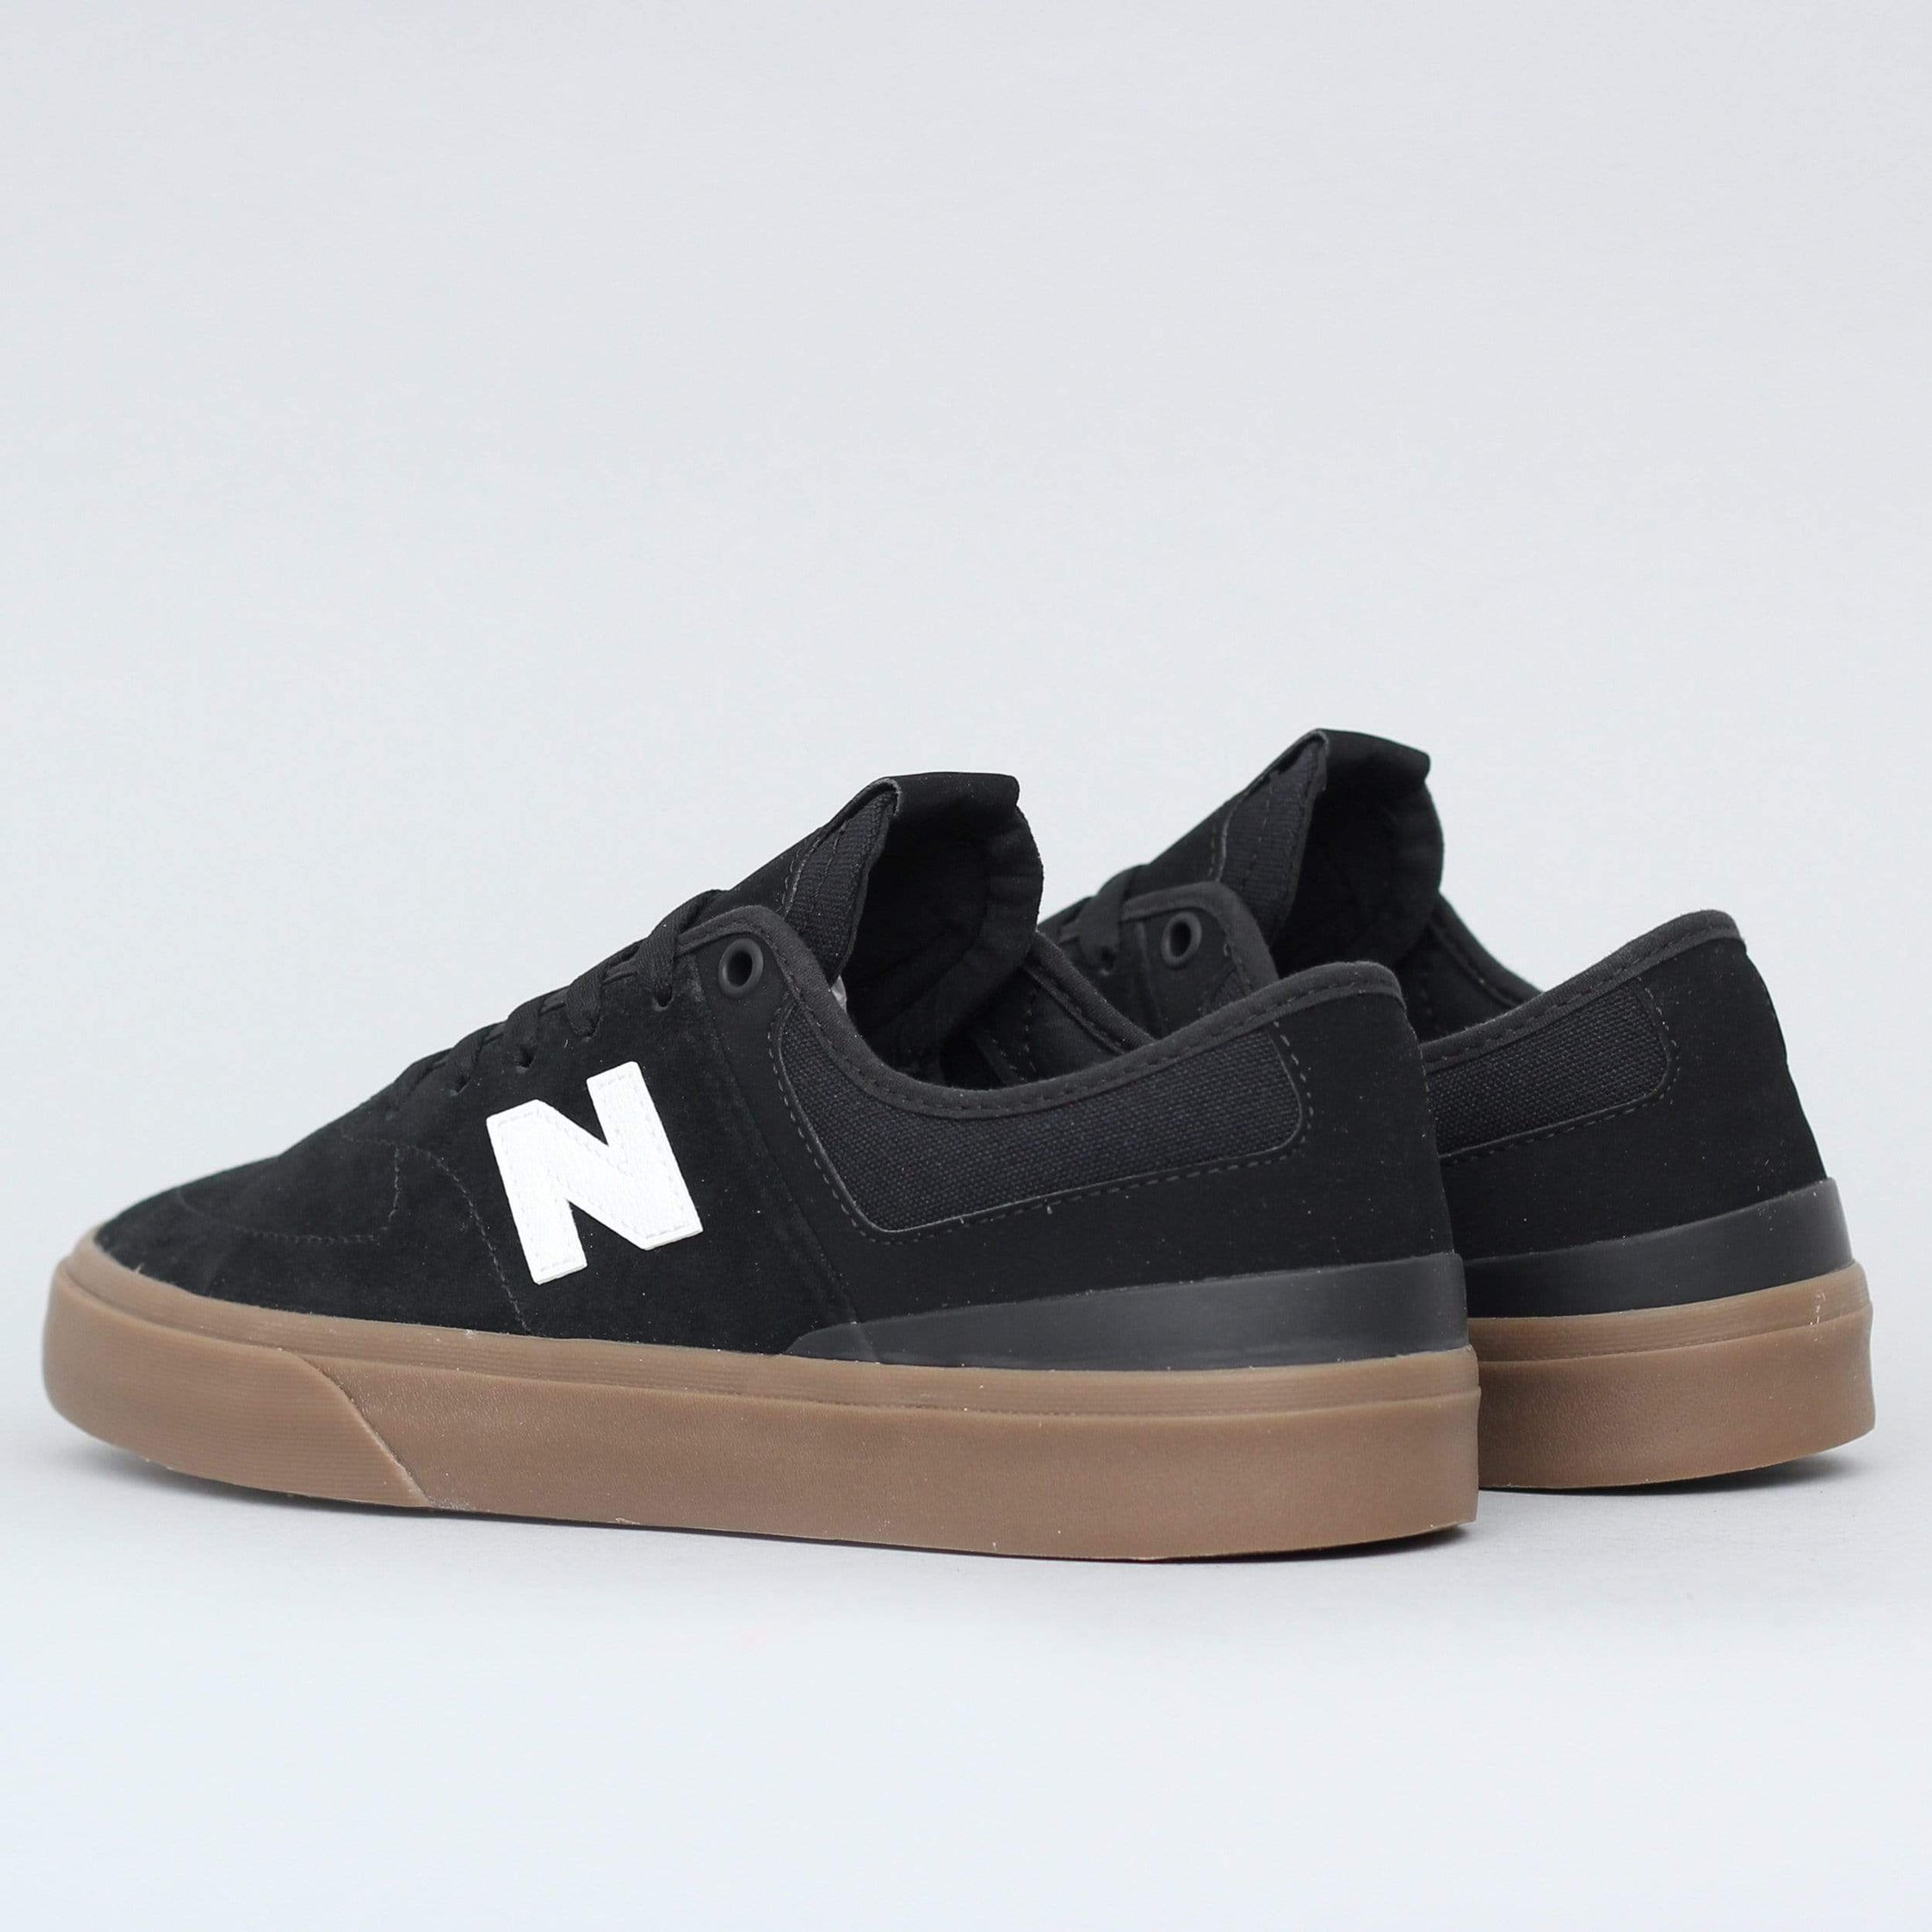 New Balance Numeric 379 Shoes Black / Gum